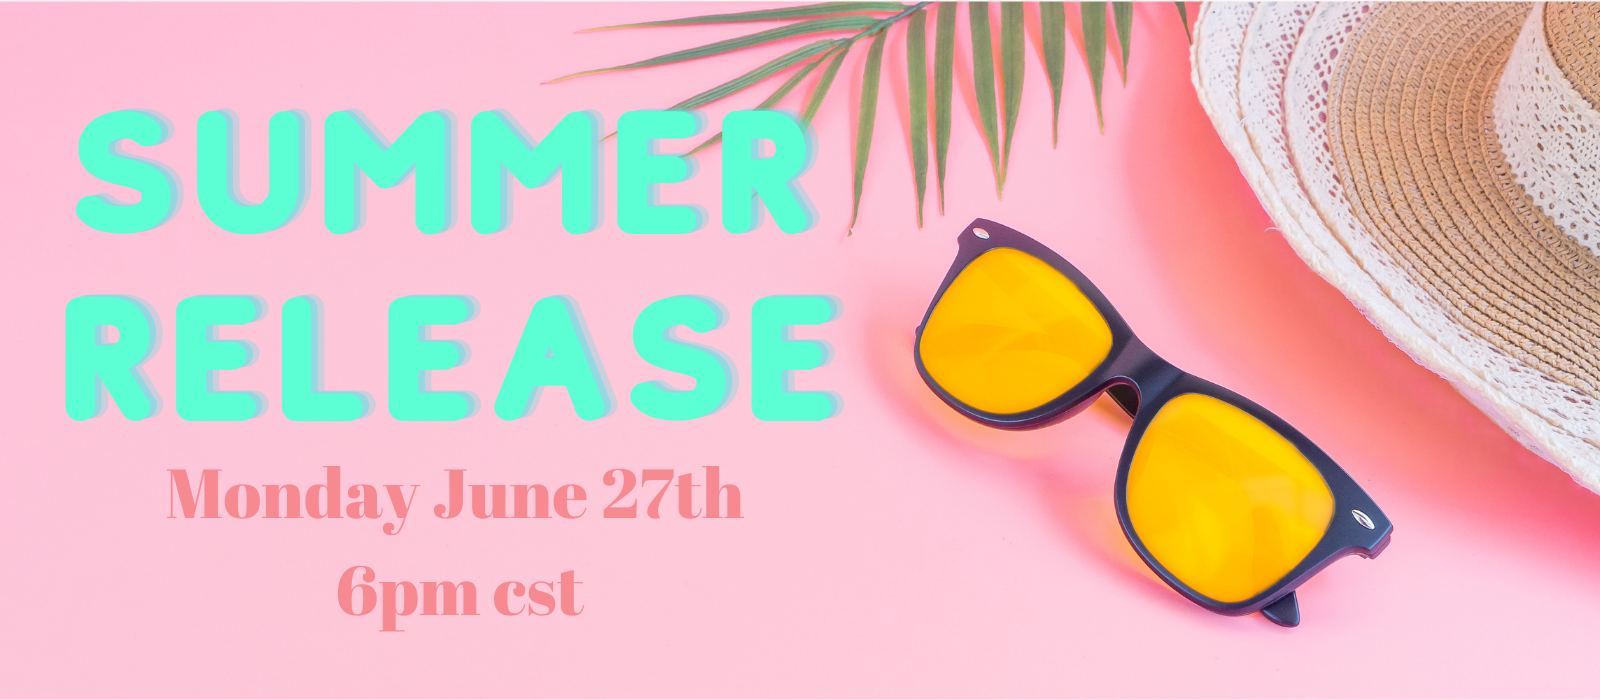 Summer Release Monday June 27th 6pm cst